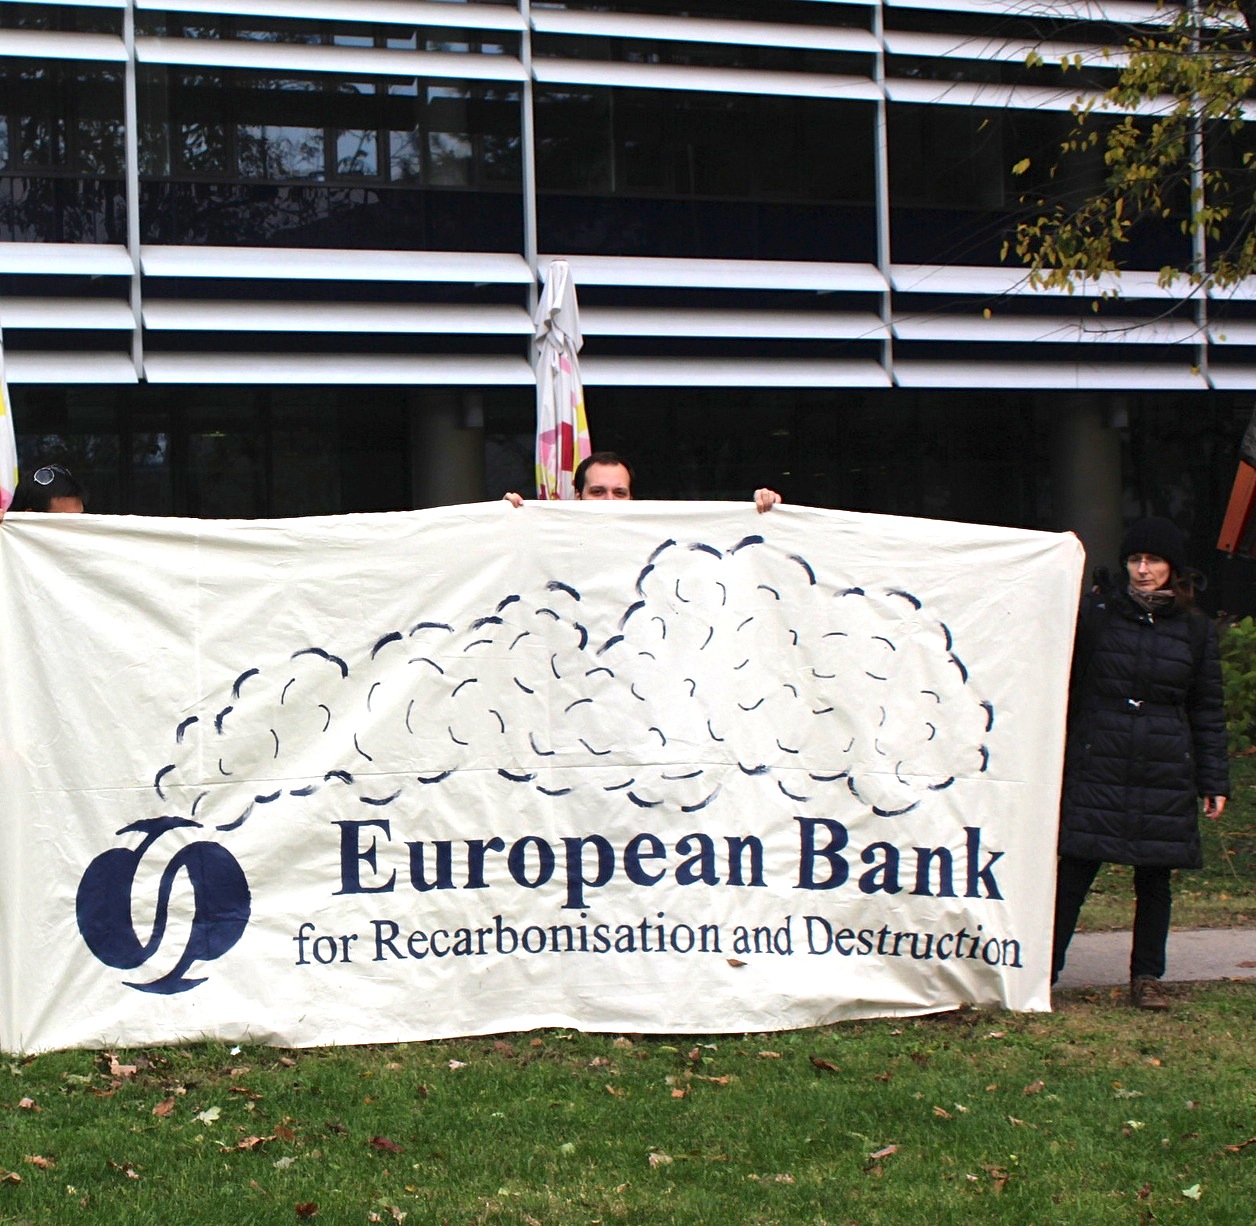 Bank-for-Recarbonisation-and-Destruction--cropped